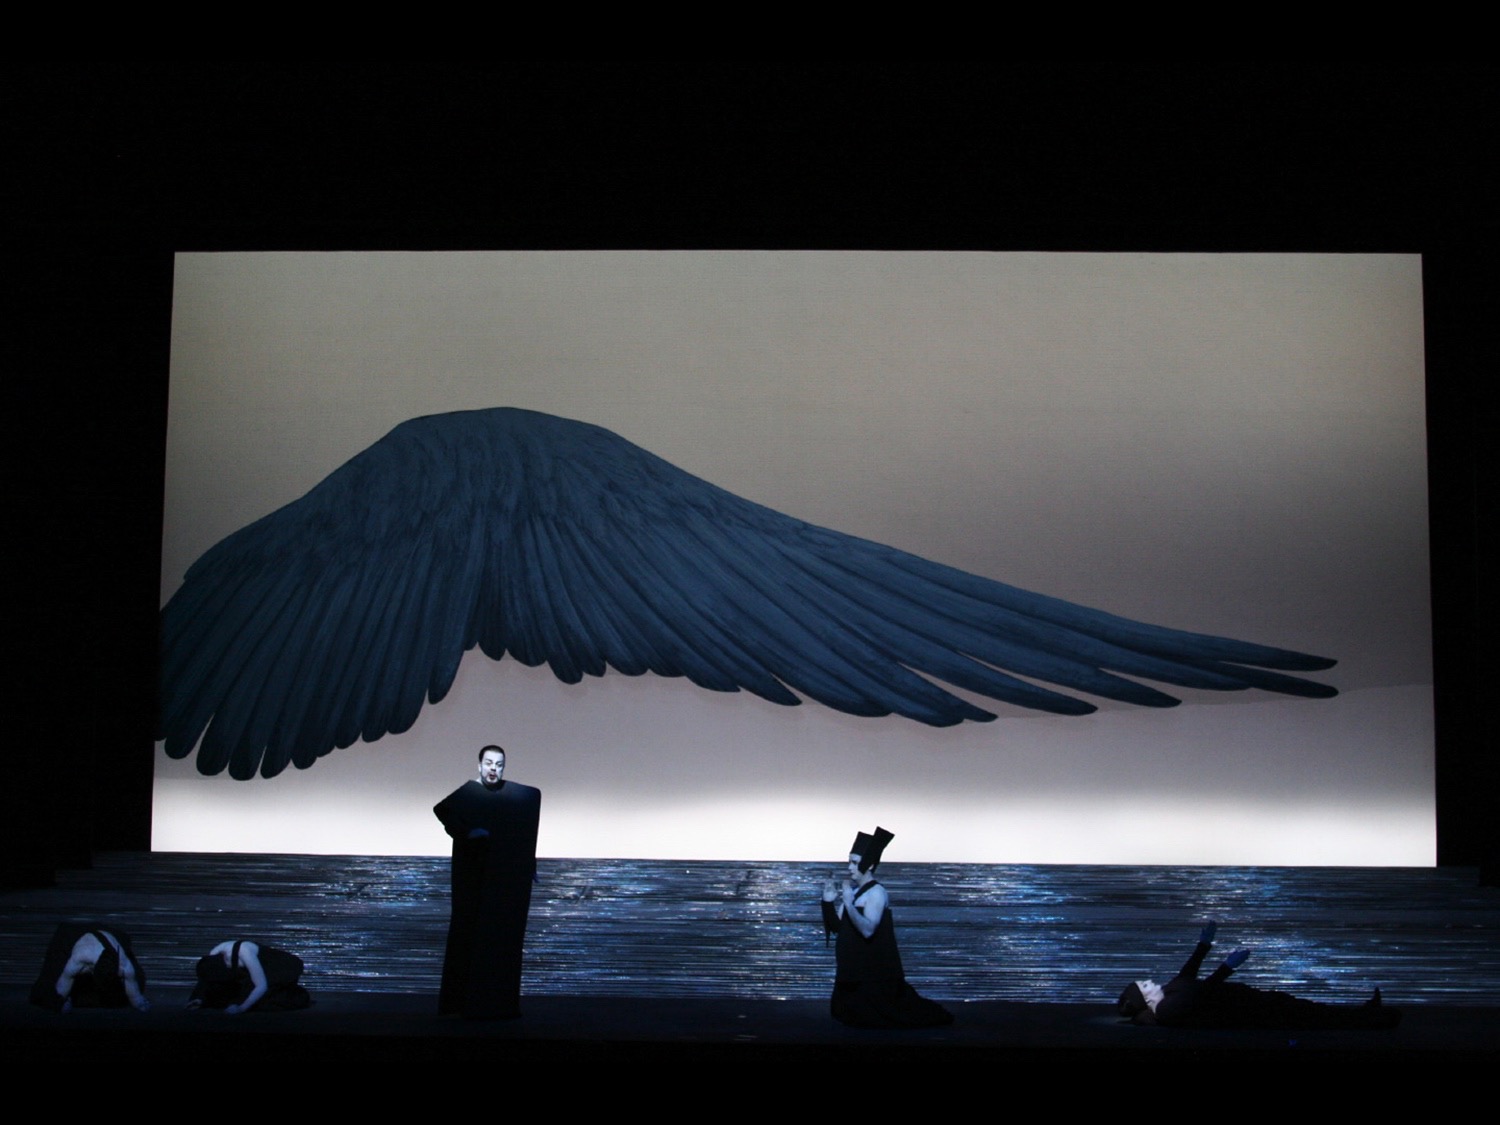  Parsifal
LA Opera
Los Angeles, 2005  
© photo by AJ Weissbard 